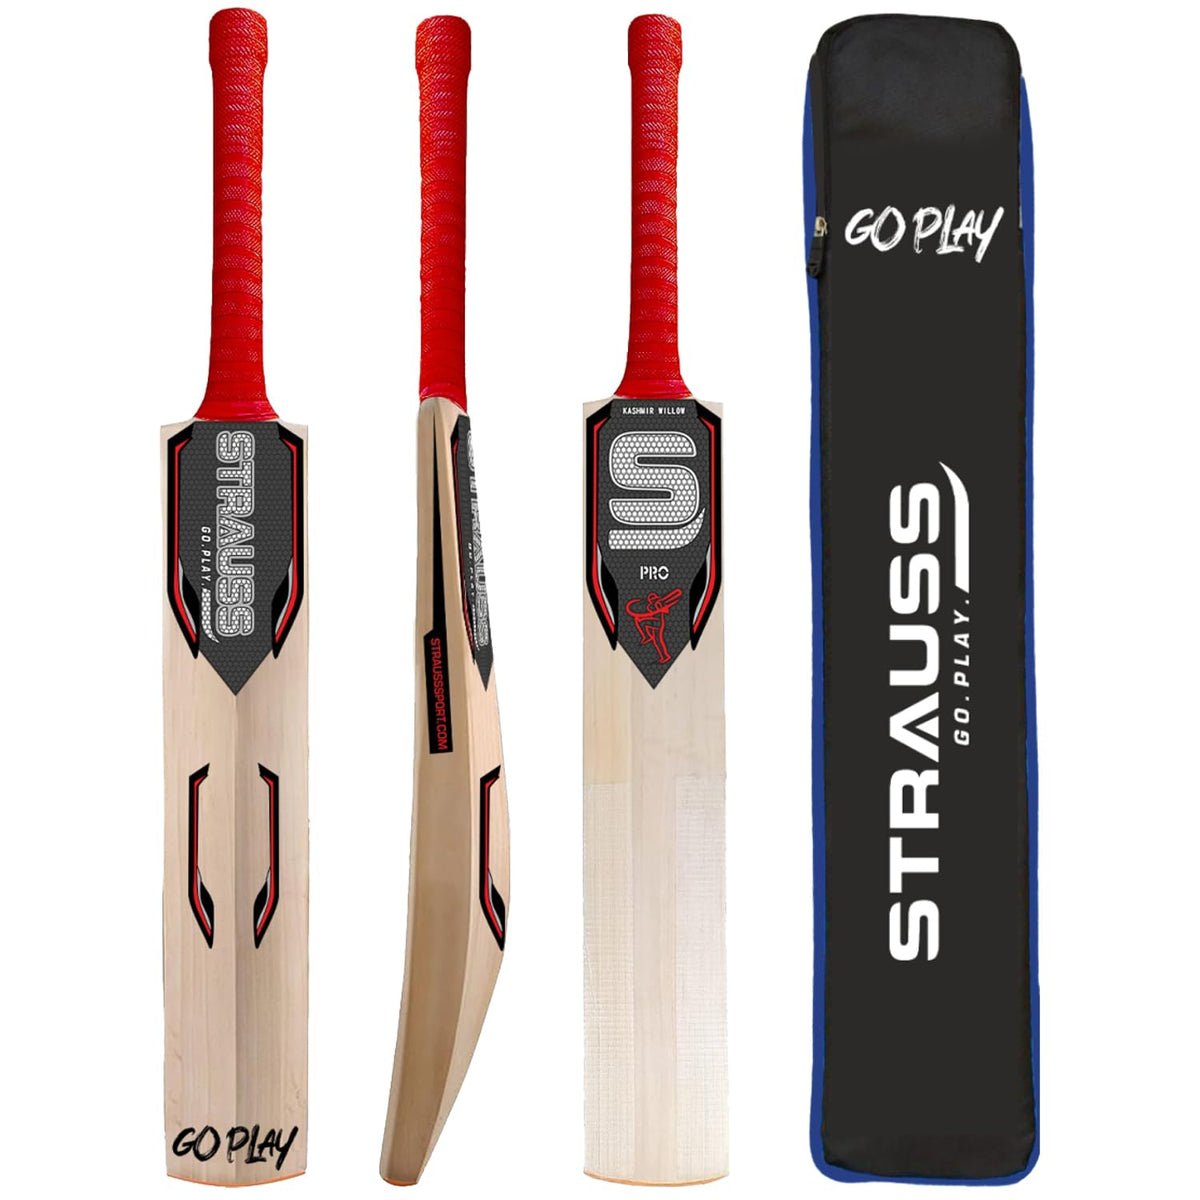 Strauss Pro Cricket Bat | Kashmir Willow | Cricket Bat with Grip for Tournament Match | Standard Leather Ball Bat for Cricket | Size: 6 (900-1050 Grams)